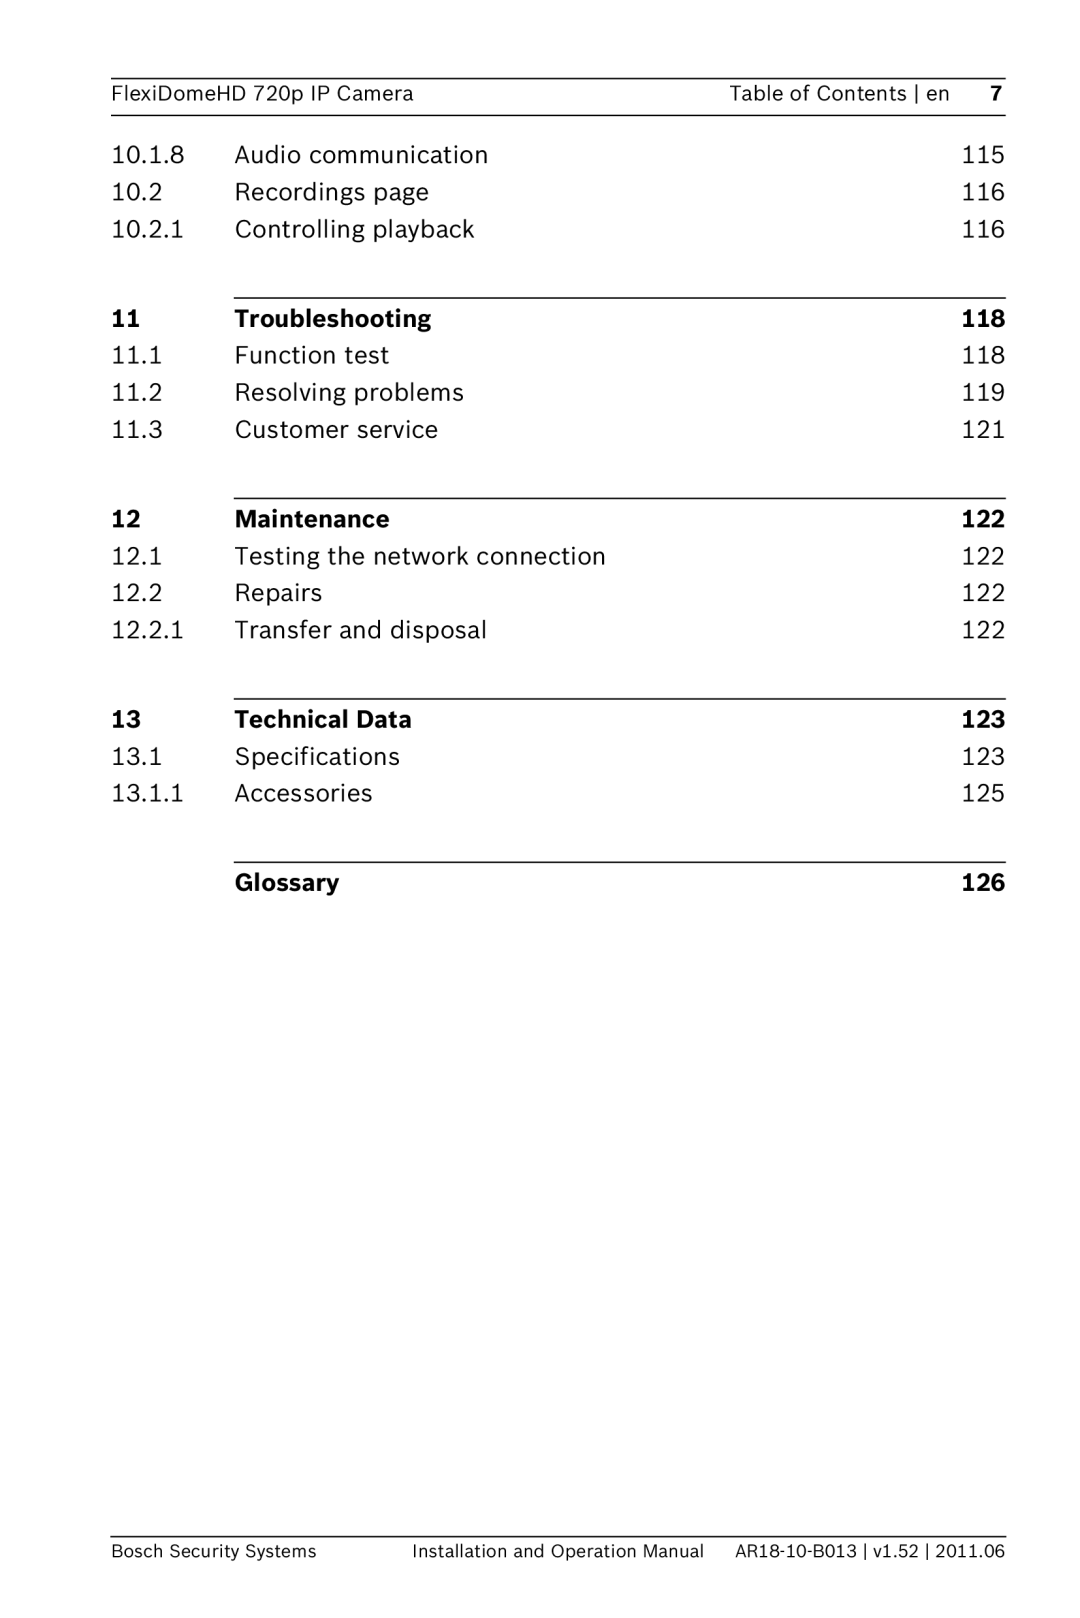 Bosch Appliances NDN-921 operation manual Troubleshooting, Maintenance, Technical Data, Glossary 